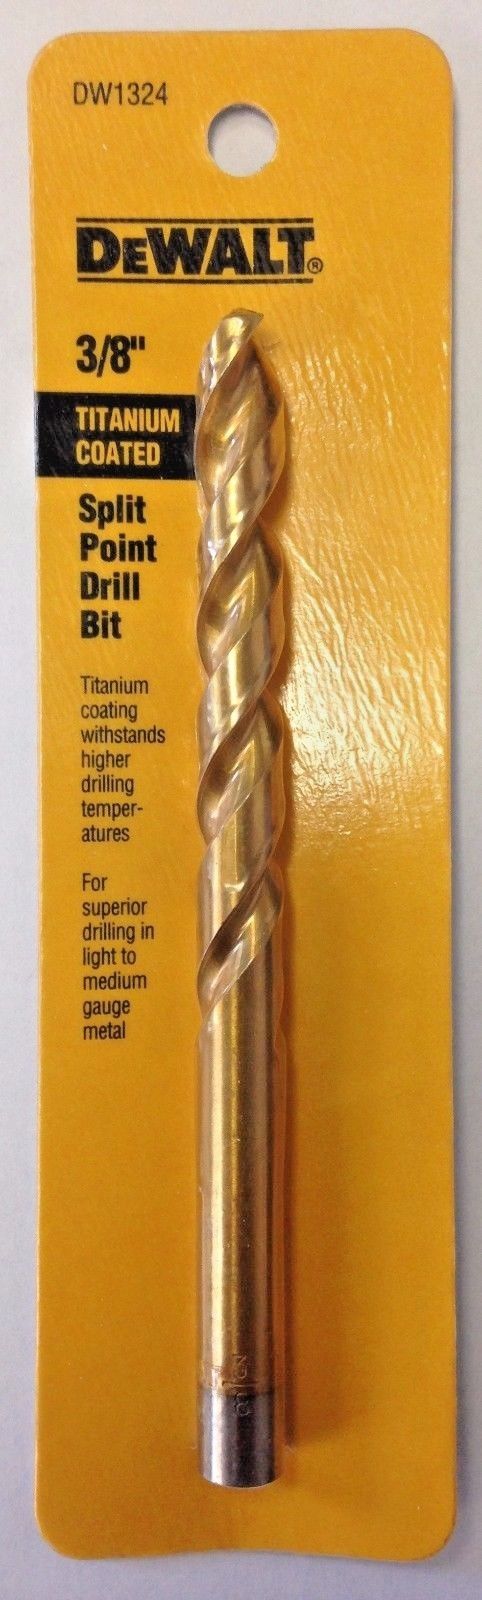 Dewalt DW1324 3/8" Titanium Coated  Split Point Drill Bit